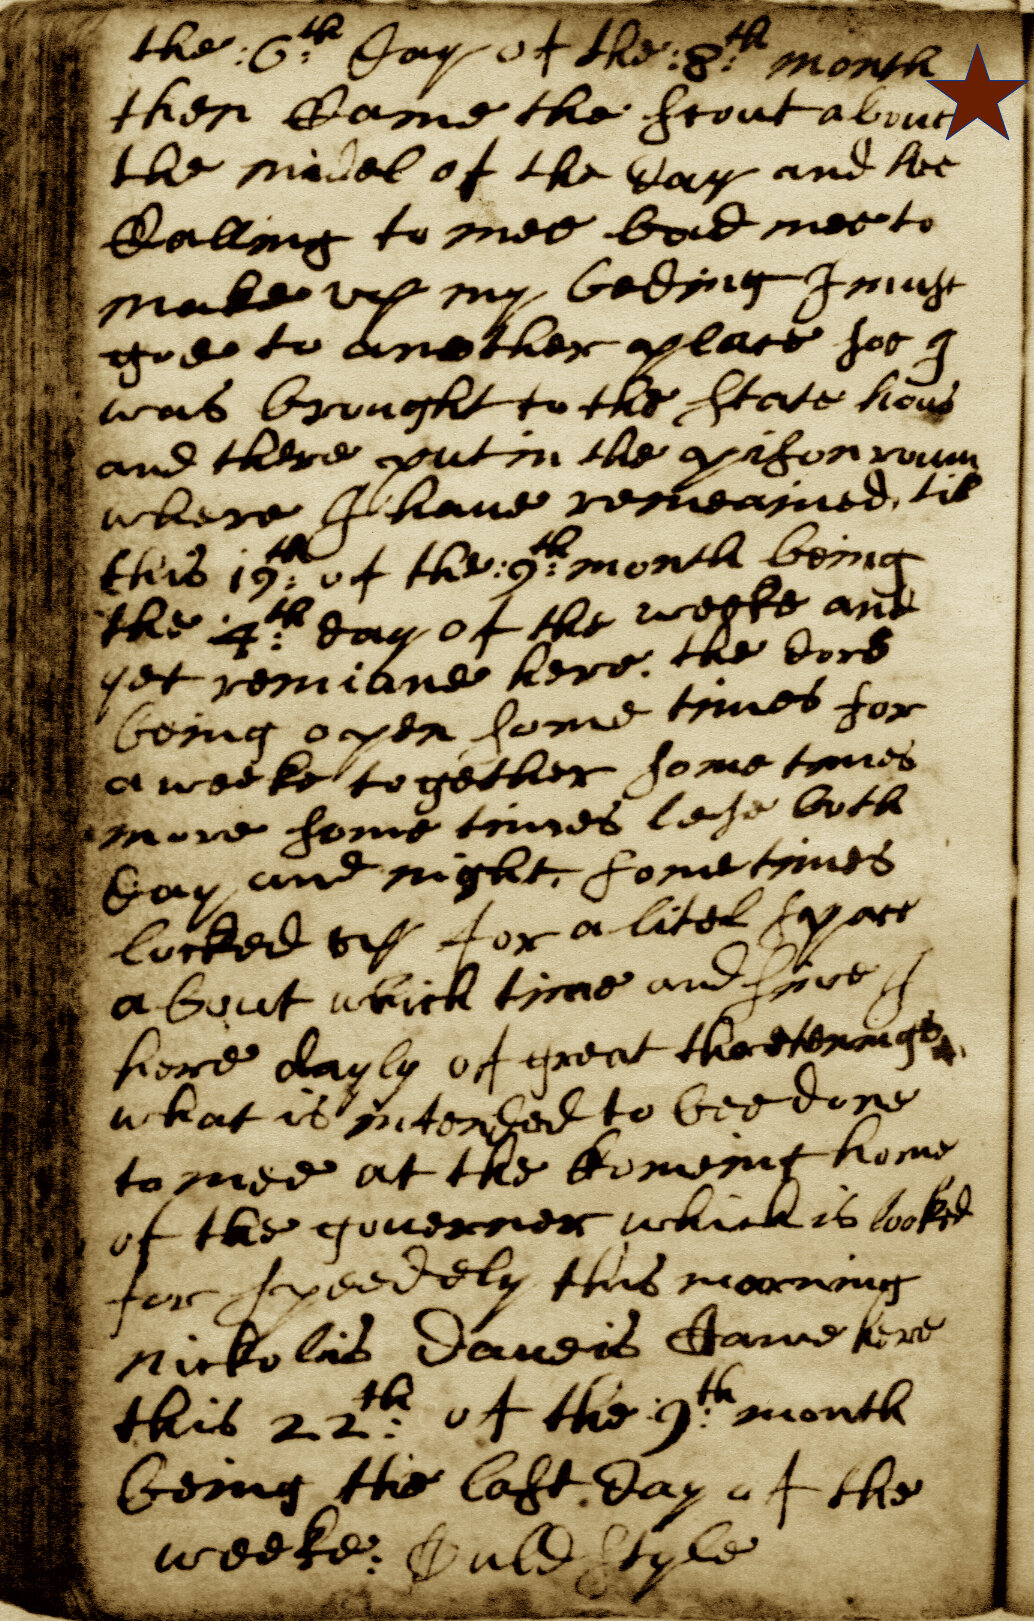 Journal of John Bowne, Folio 51 verso